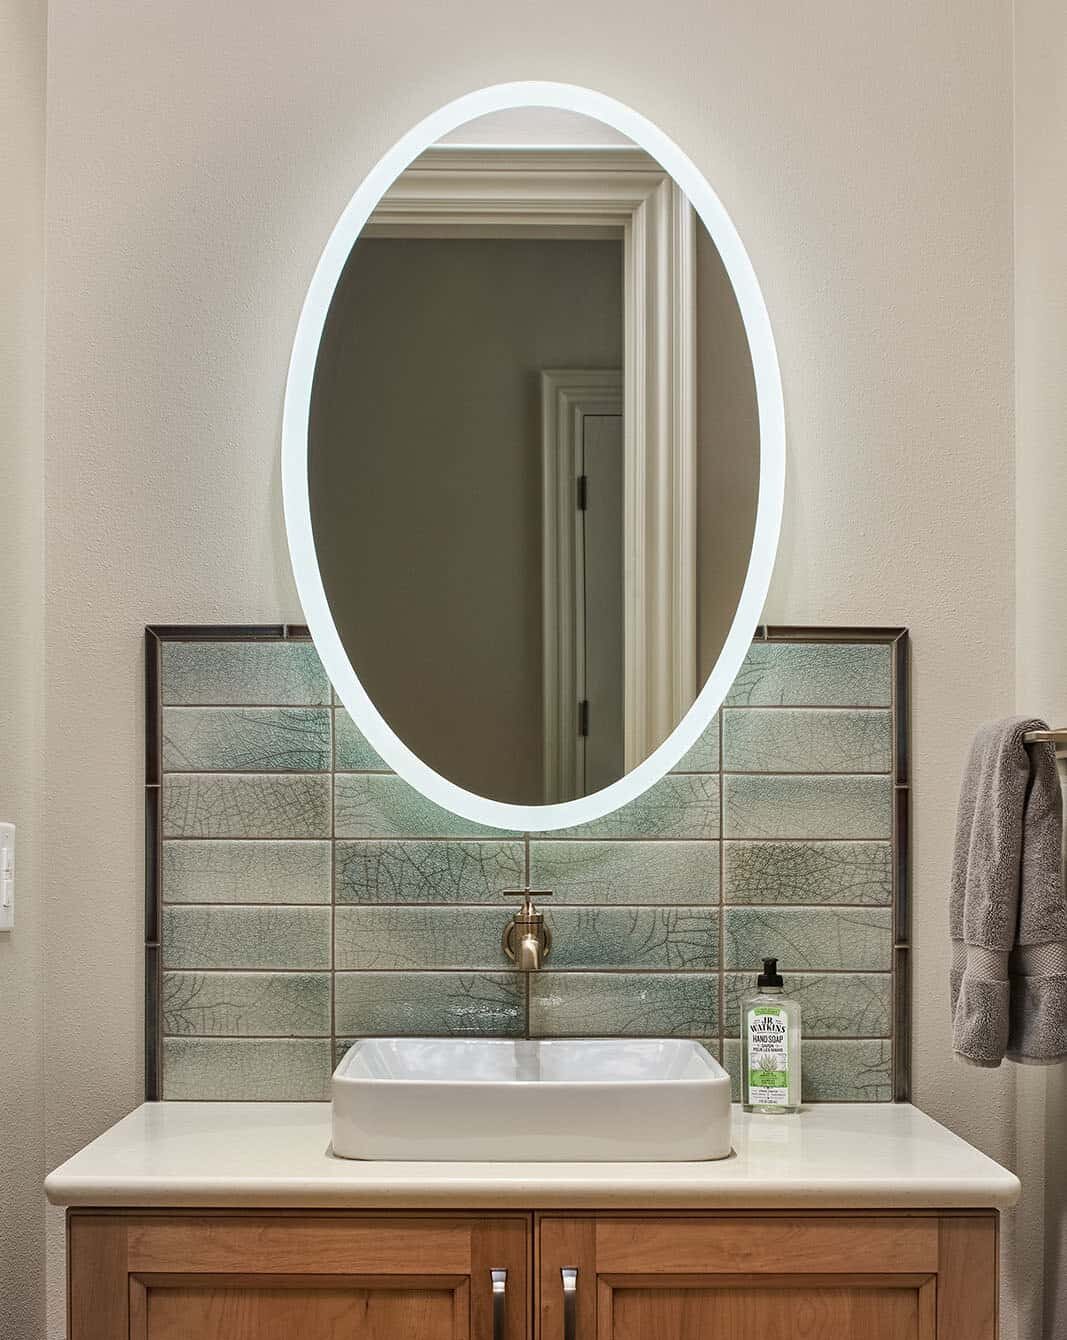 Powder bath single sink vanity with oval lighted mirror.